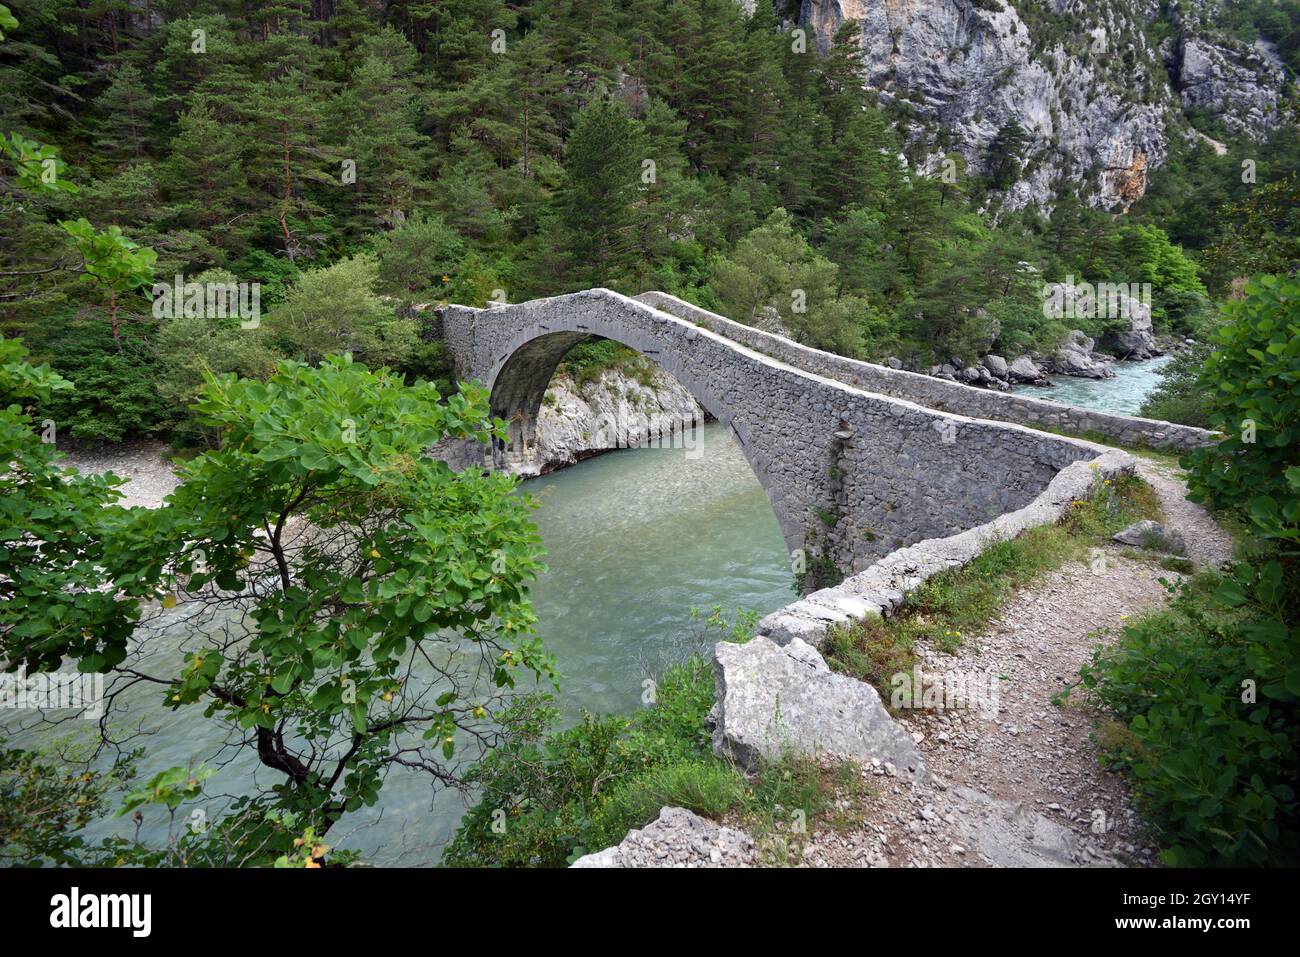 Alte Steinbrücke oder Hump Back Brücke, Pont de Tusset, über den Fluss Verdon, Verdon Schlucht, Alpes-de-Haute-Provence Provence Frankreich Stockfoto